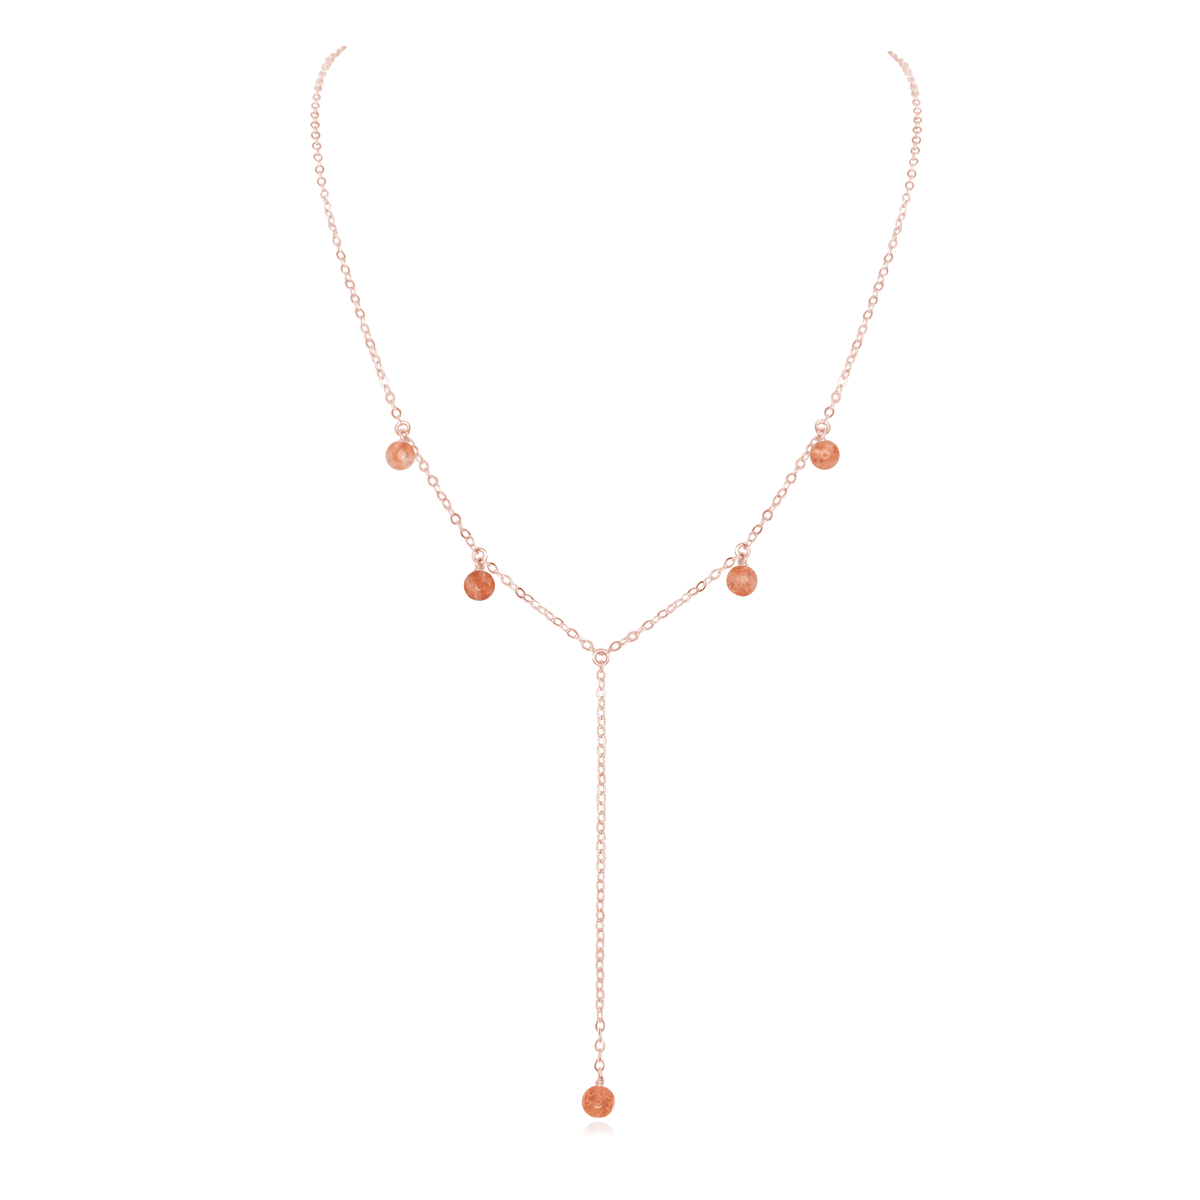 Sunstone Boho Lariat Necklace - Sunstone Boho Lariat Necklace - 14k Rose Gold Fill - Luna Tide Handmade Crystal Jewellery